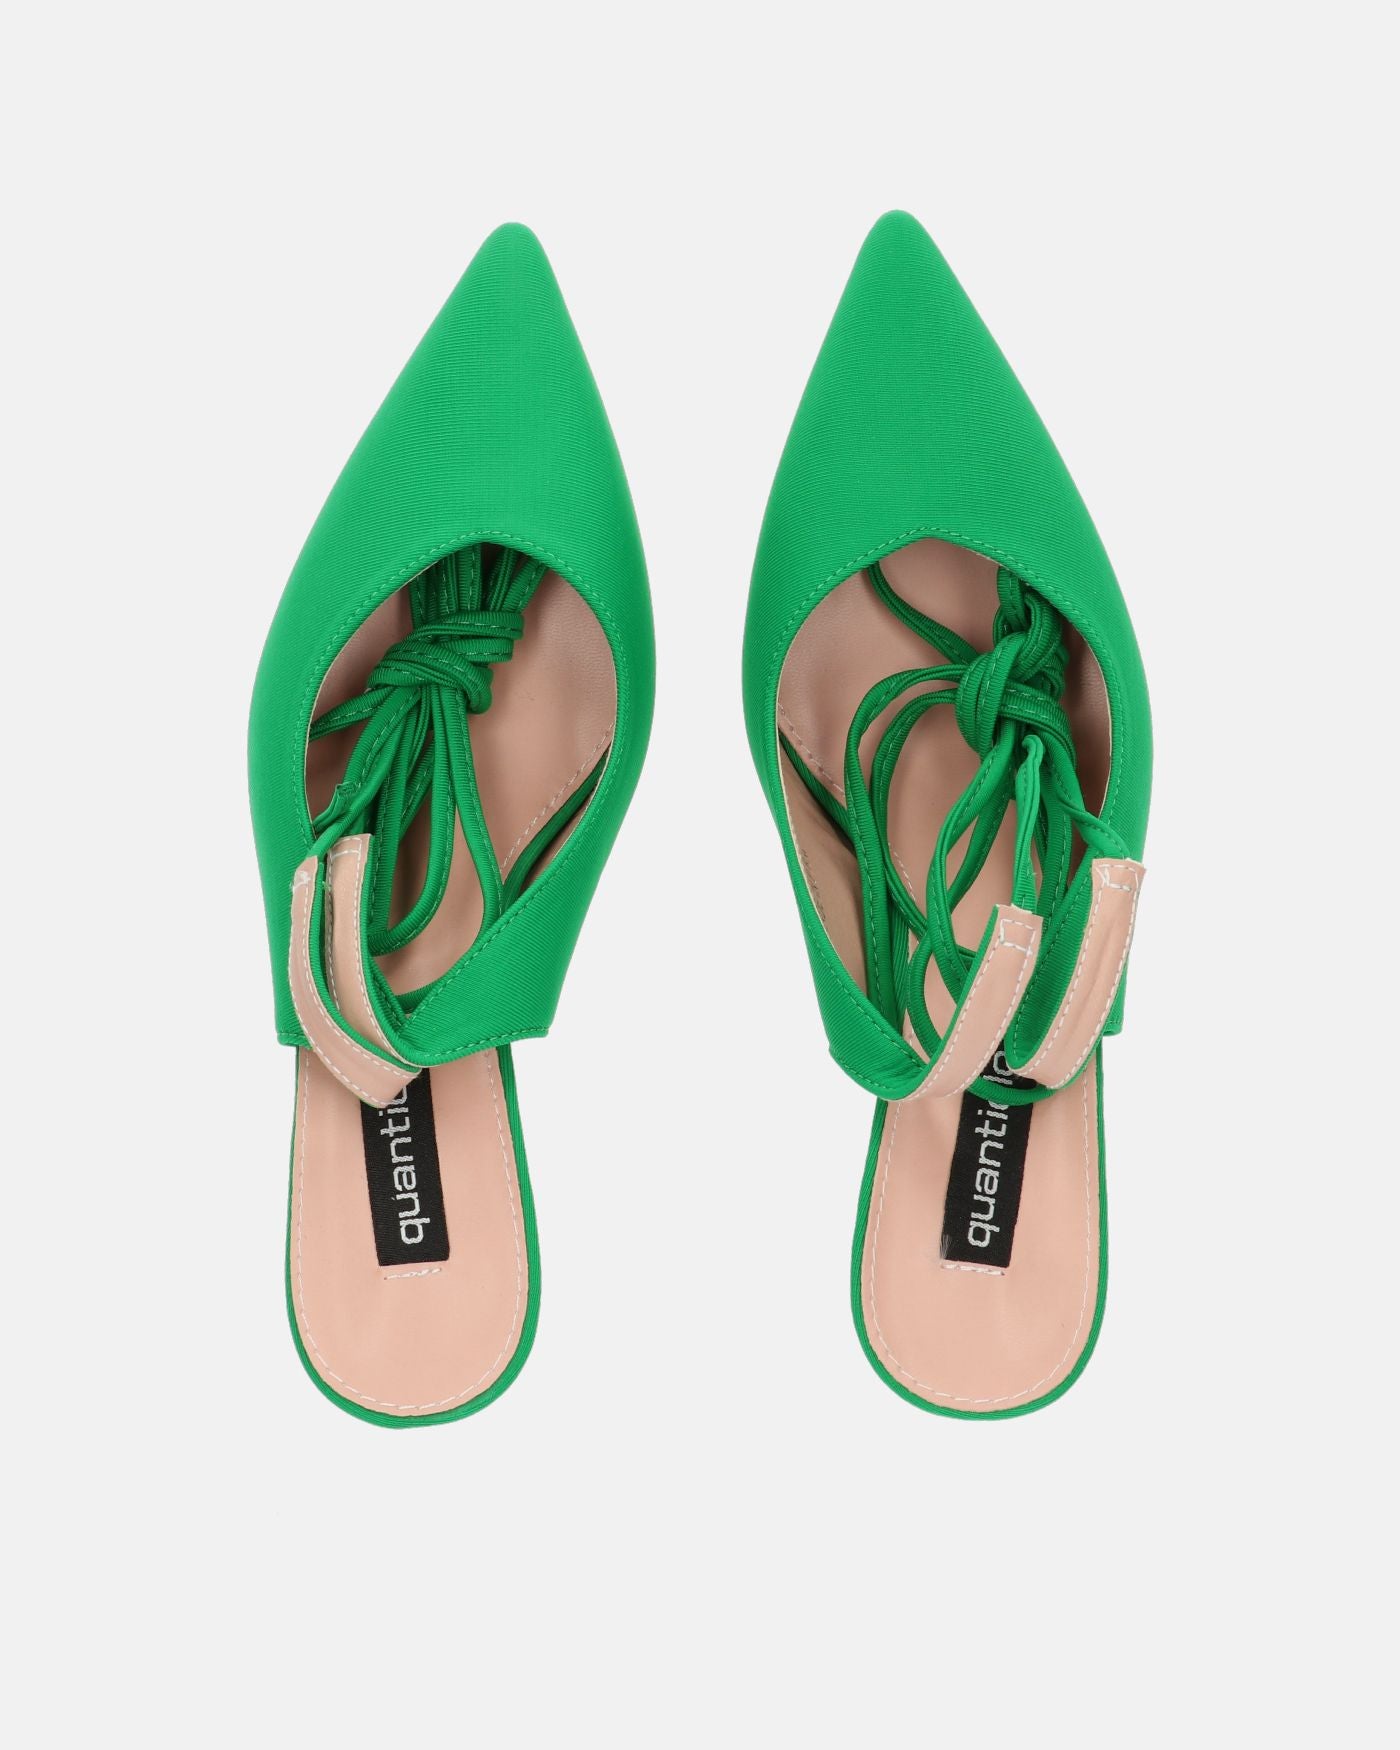 IOLE - green lycra stiletto heel shoes